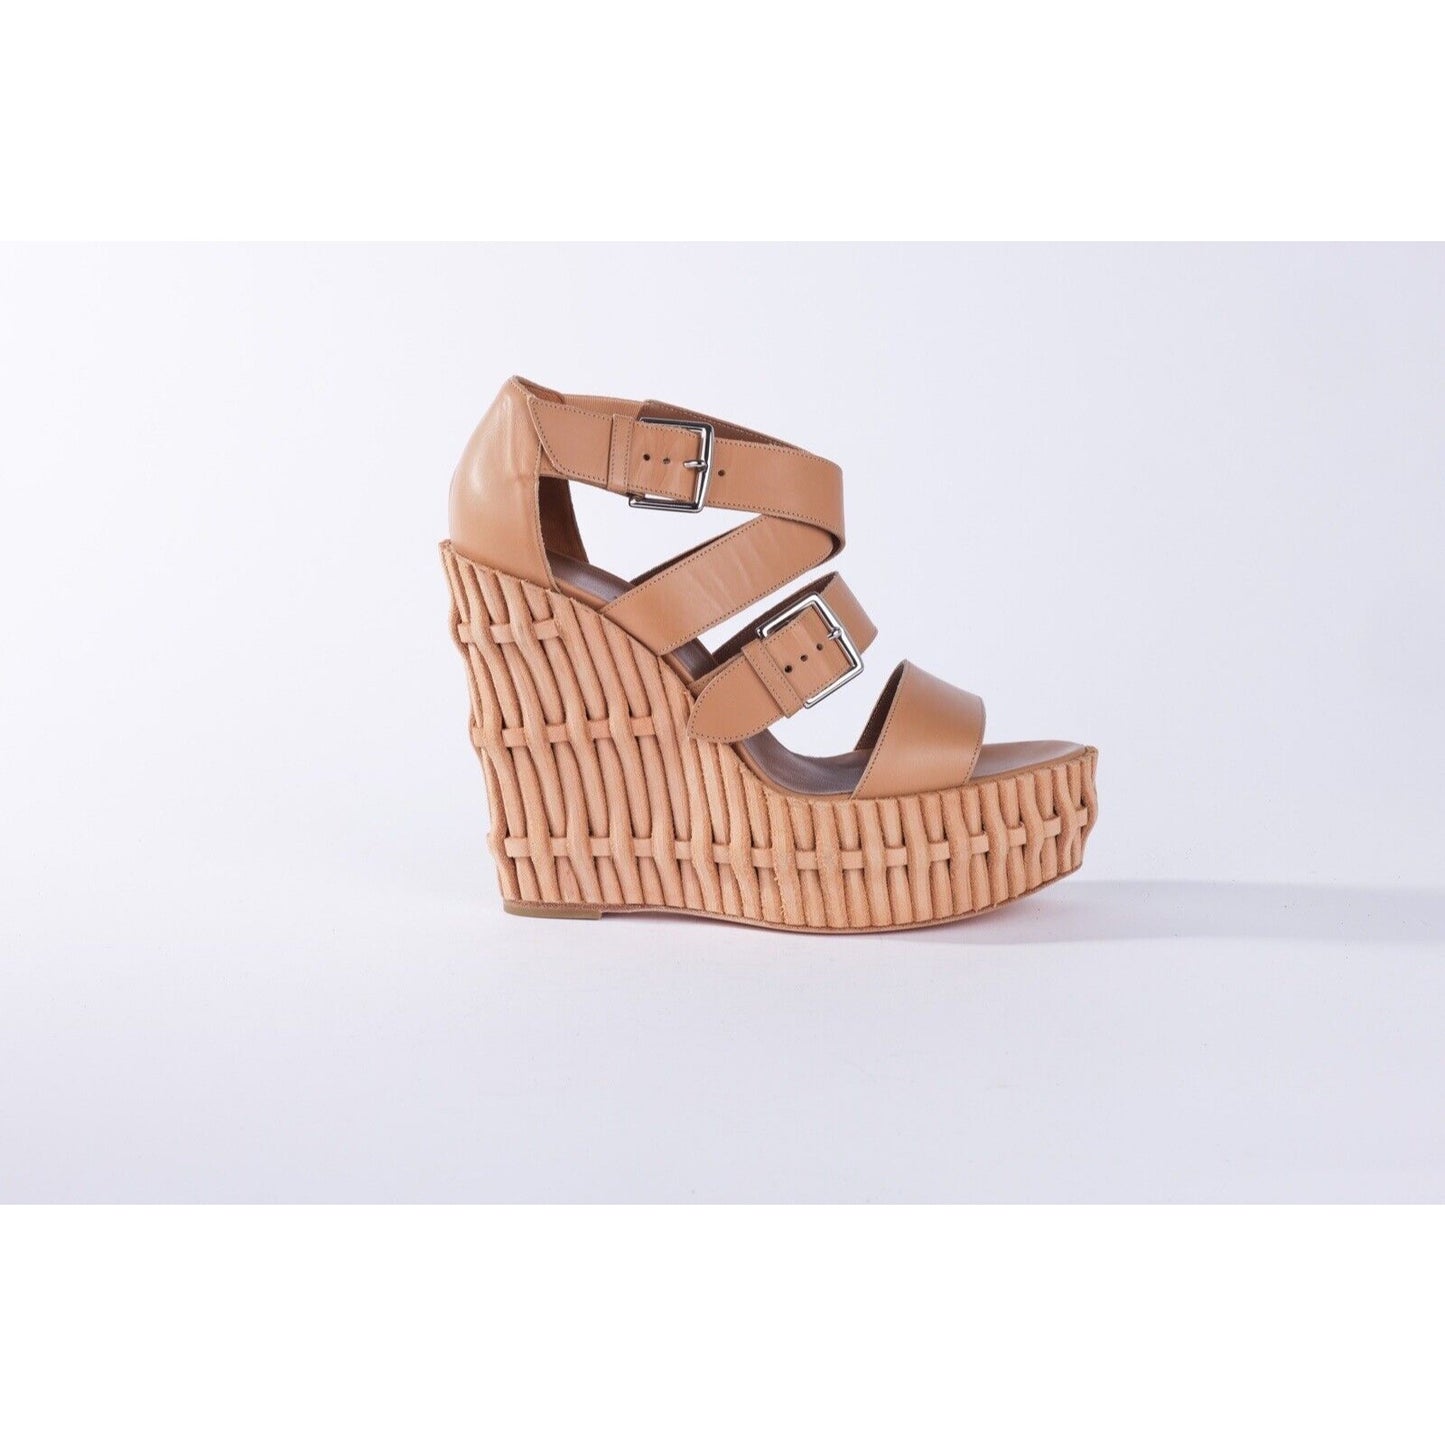 Hermes Women's Celeste Style Leather Basket Weave Wedge Heel